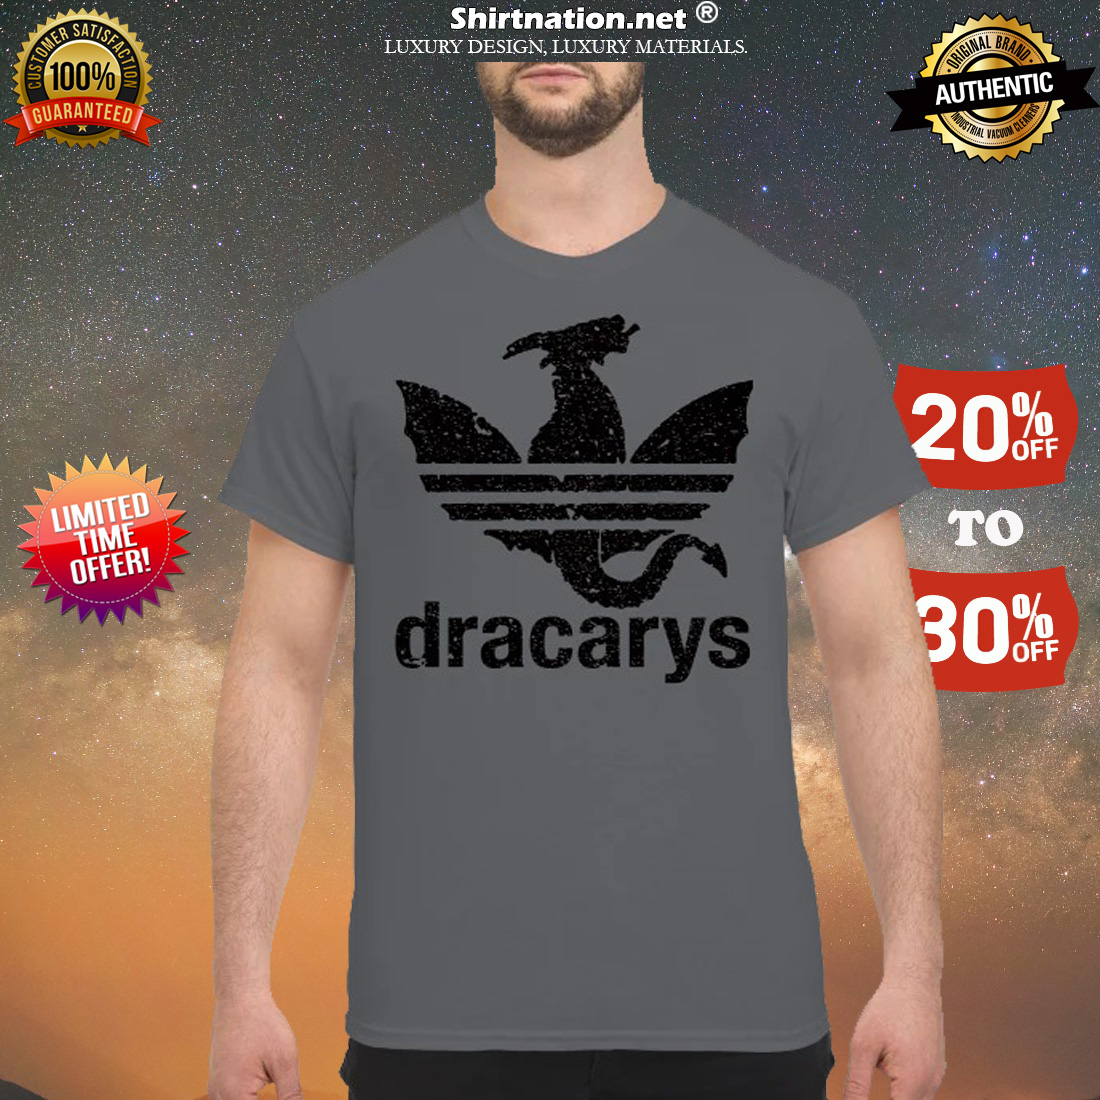 Adidas Dracarys classic shirt